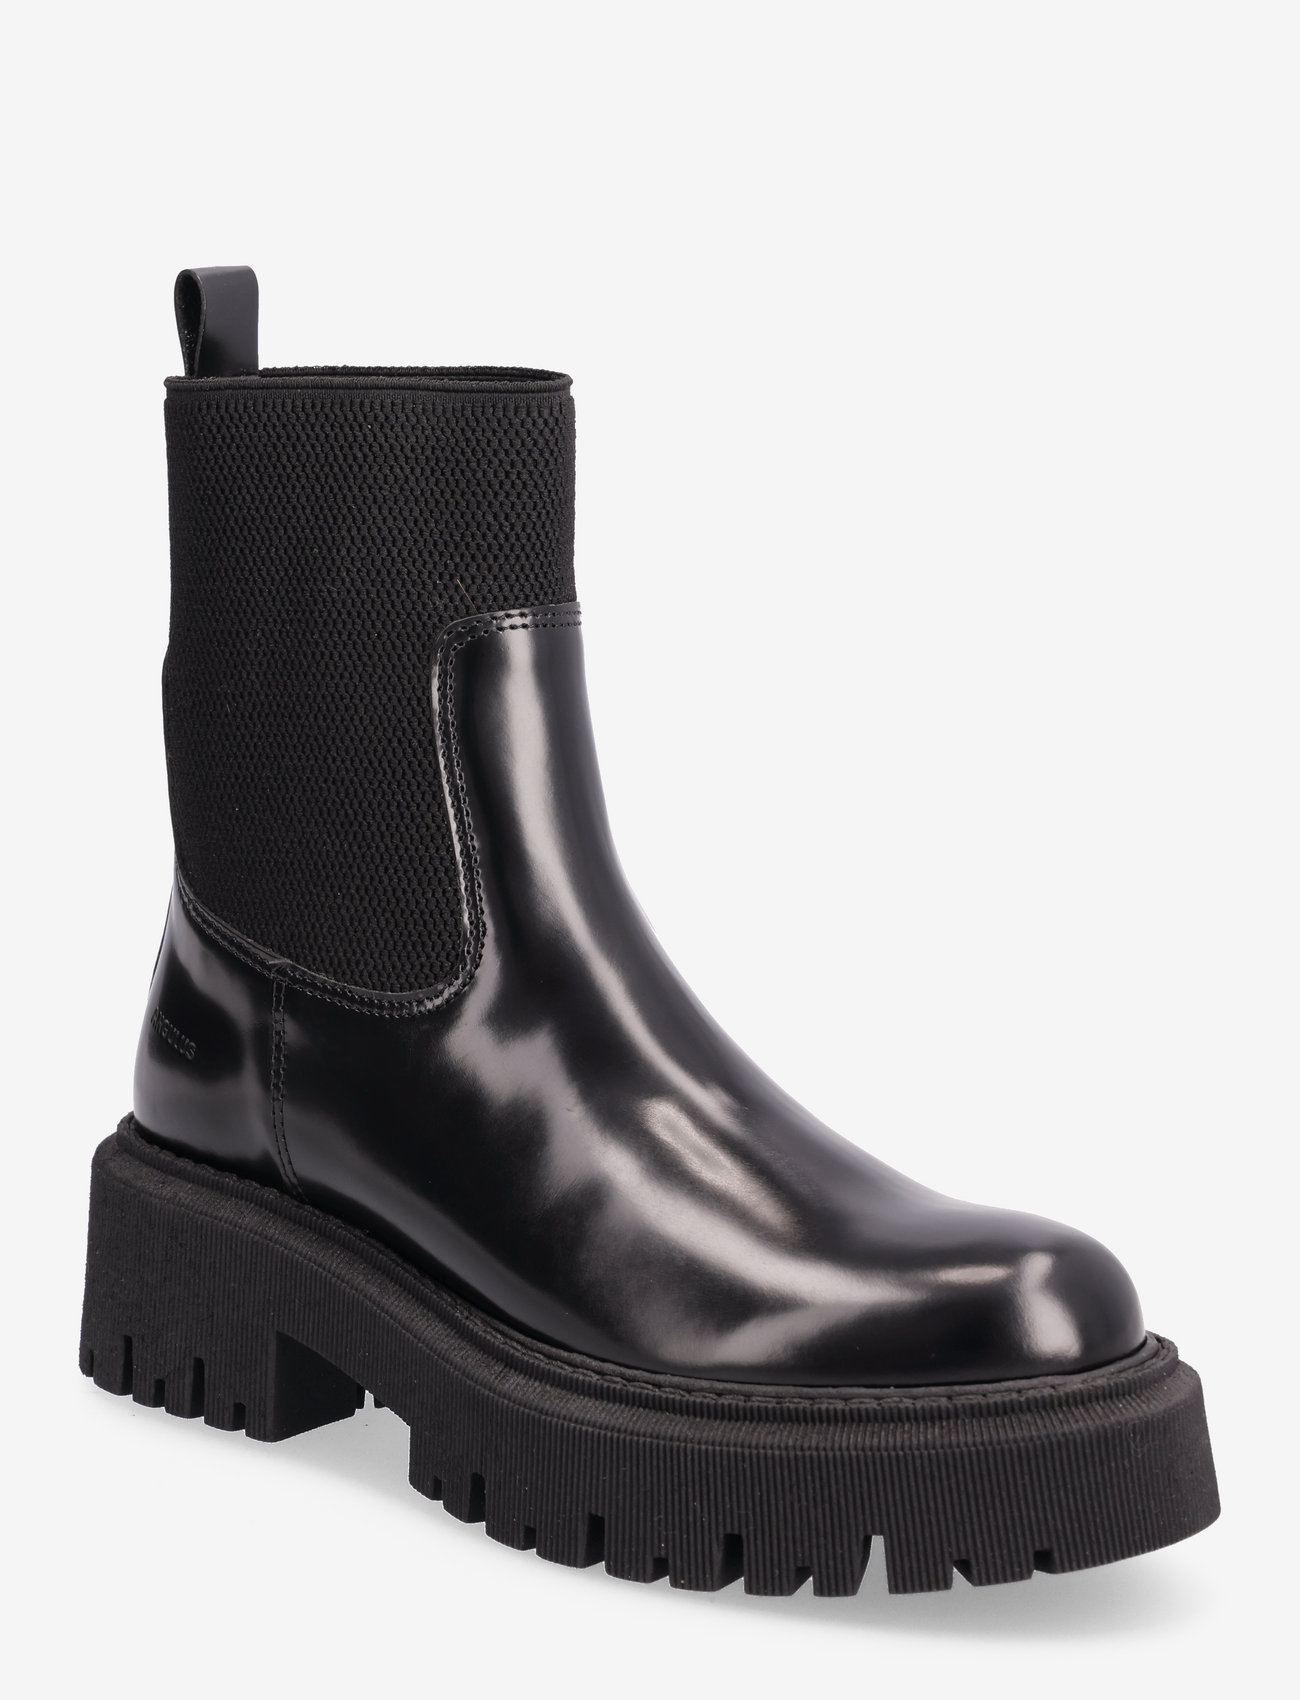 ANGULUS - Boots - flat - flat ankle boots - 1425/053 black/black - 0